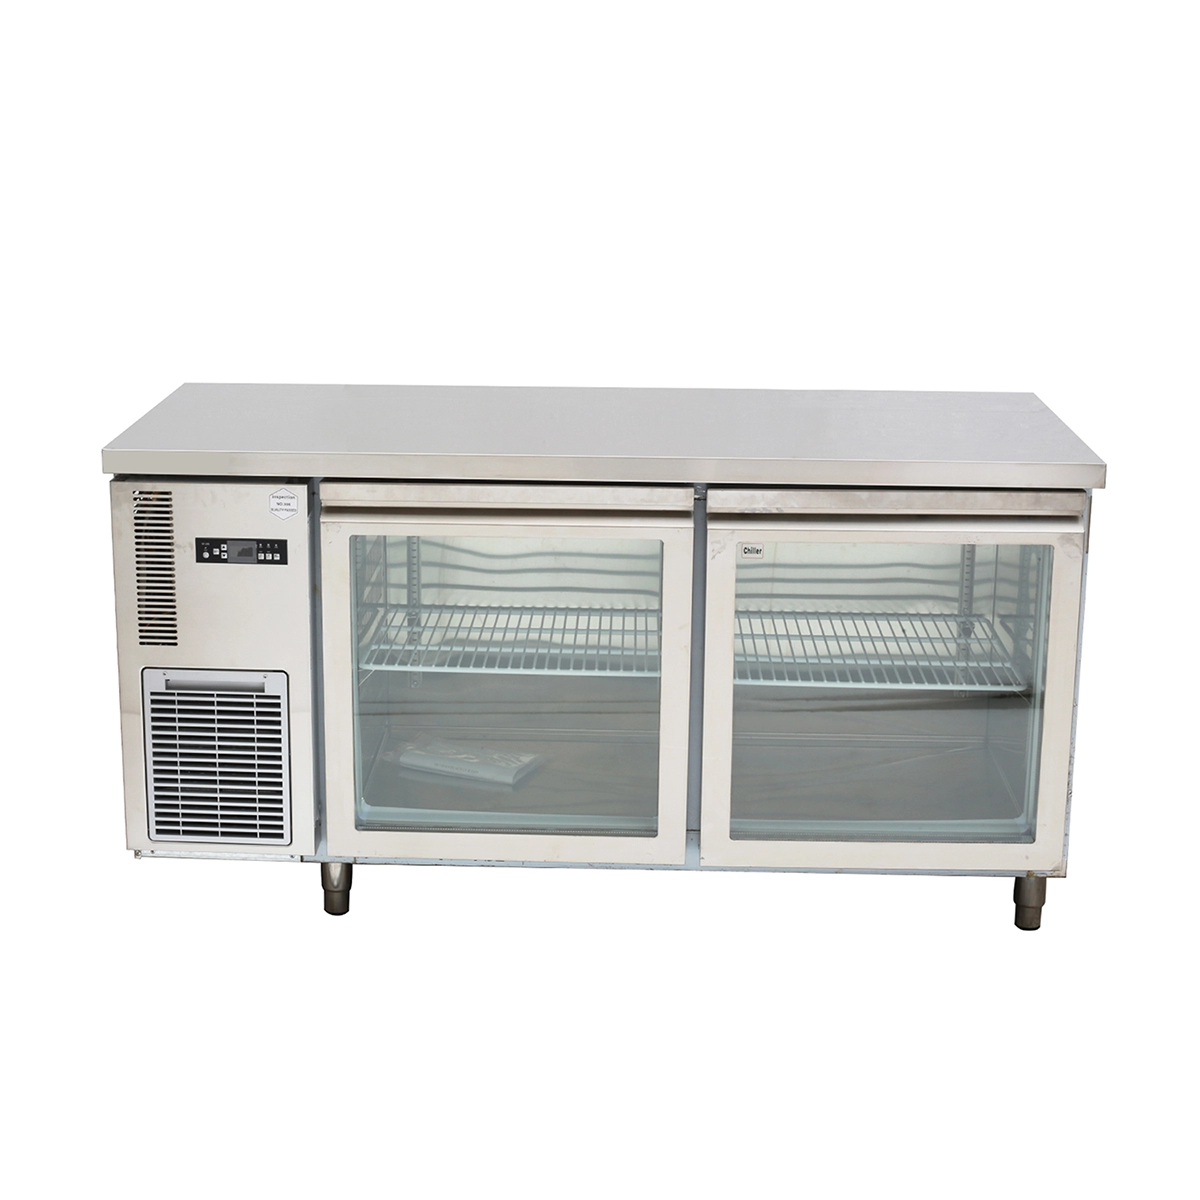 Enfriador de mostrador comercial Refrigerador y enfriador de mostrador